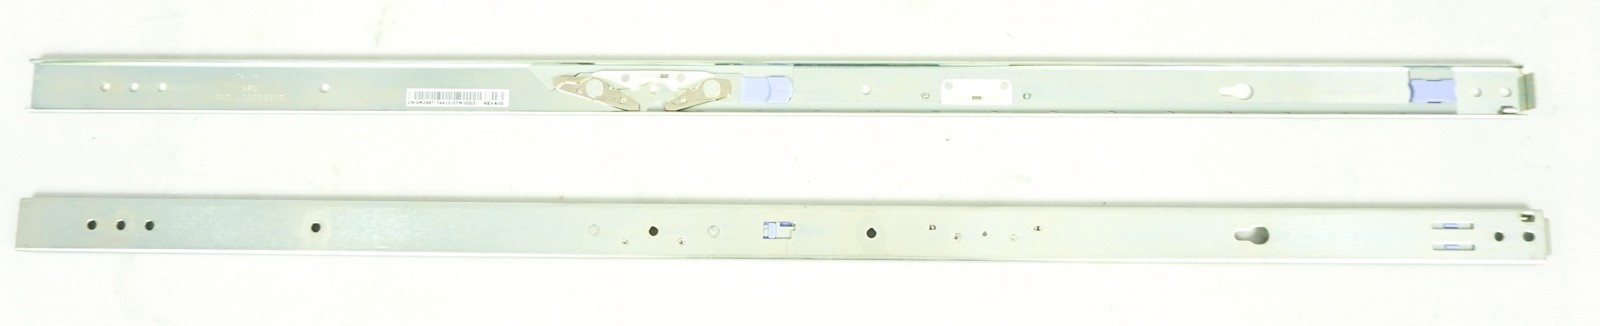 Dell PowerEdge FS12 Rail Inners